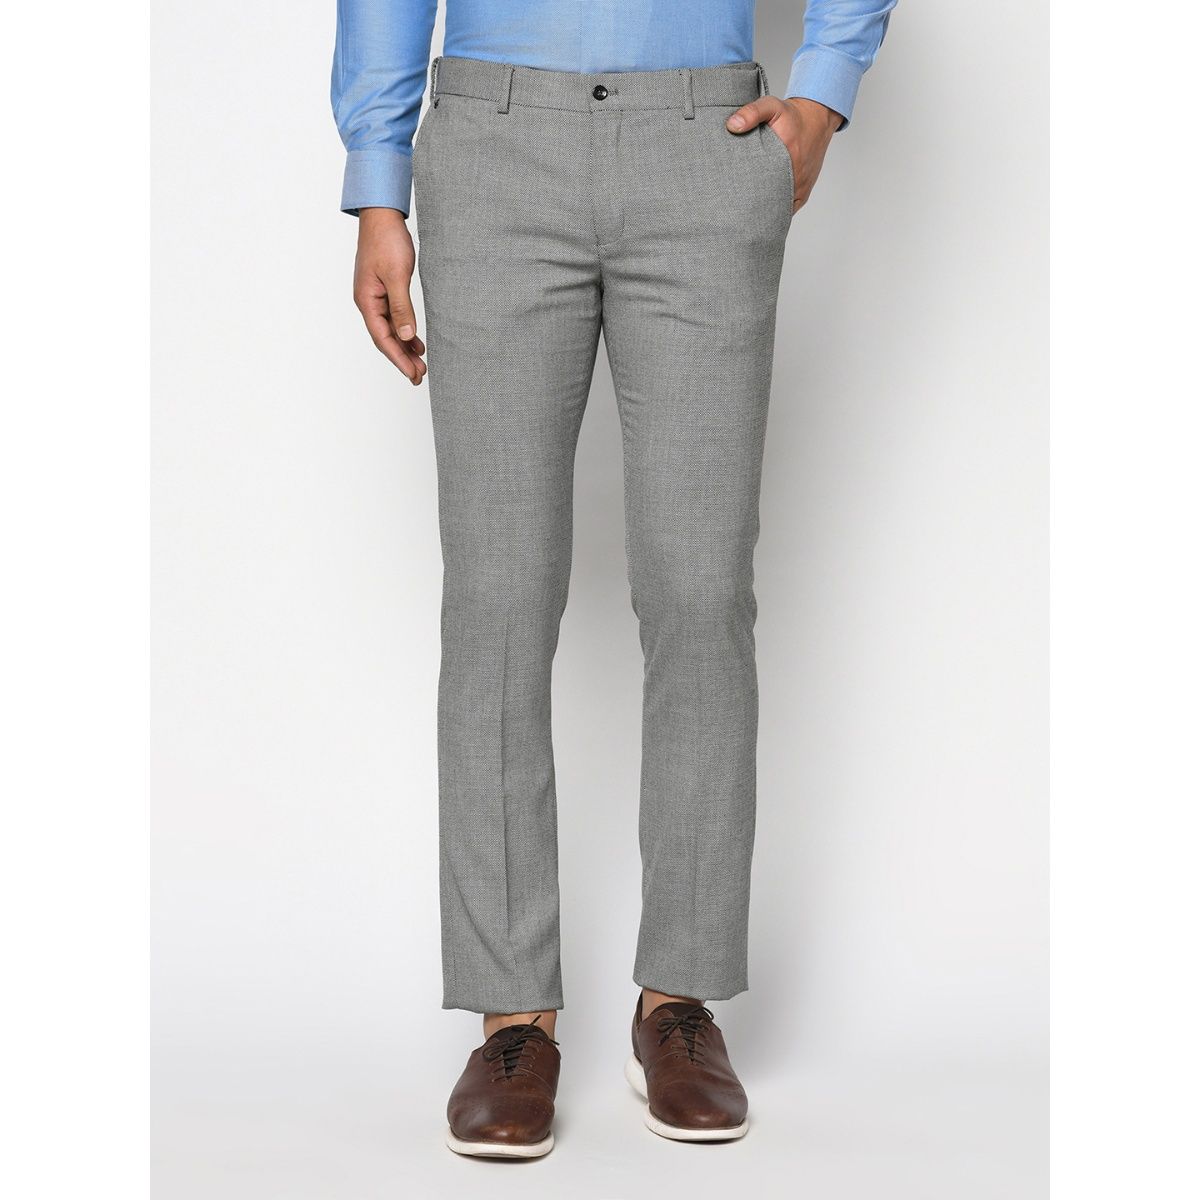 Buy online Grey Solid Flat Front Formal Trouser from Bottom Wear for Men by  V-mart for ₹429 at 10% off | 2024 Limeroad.com